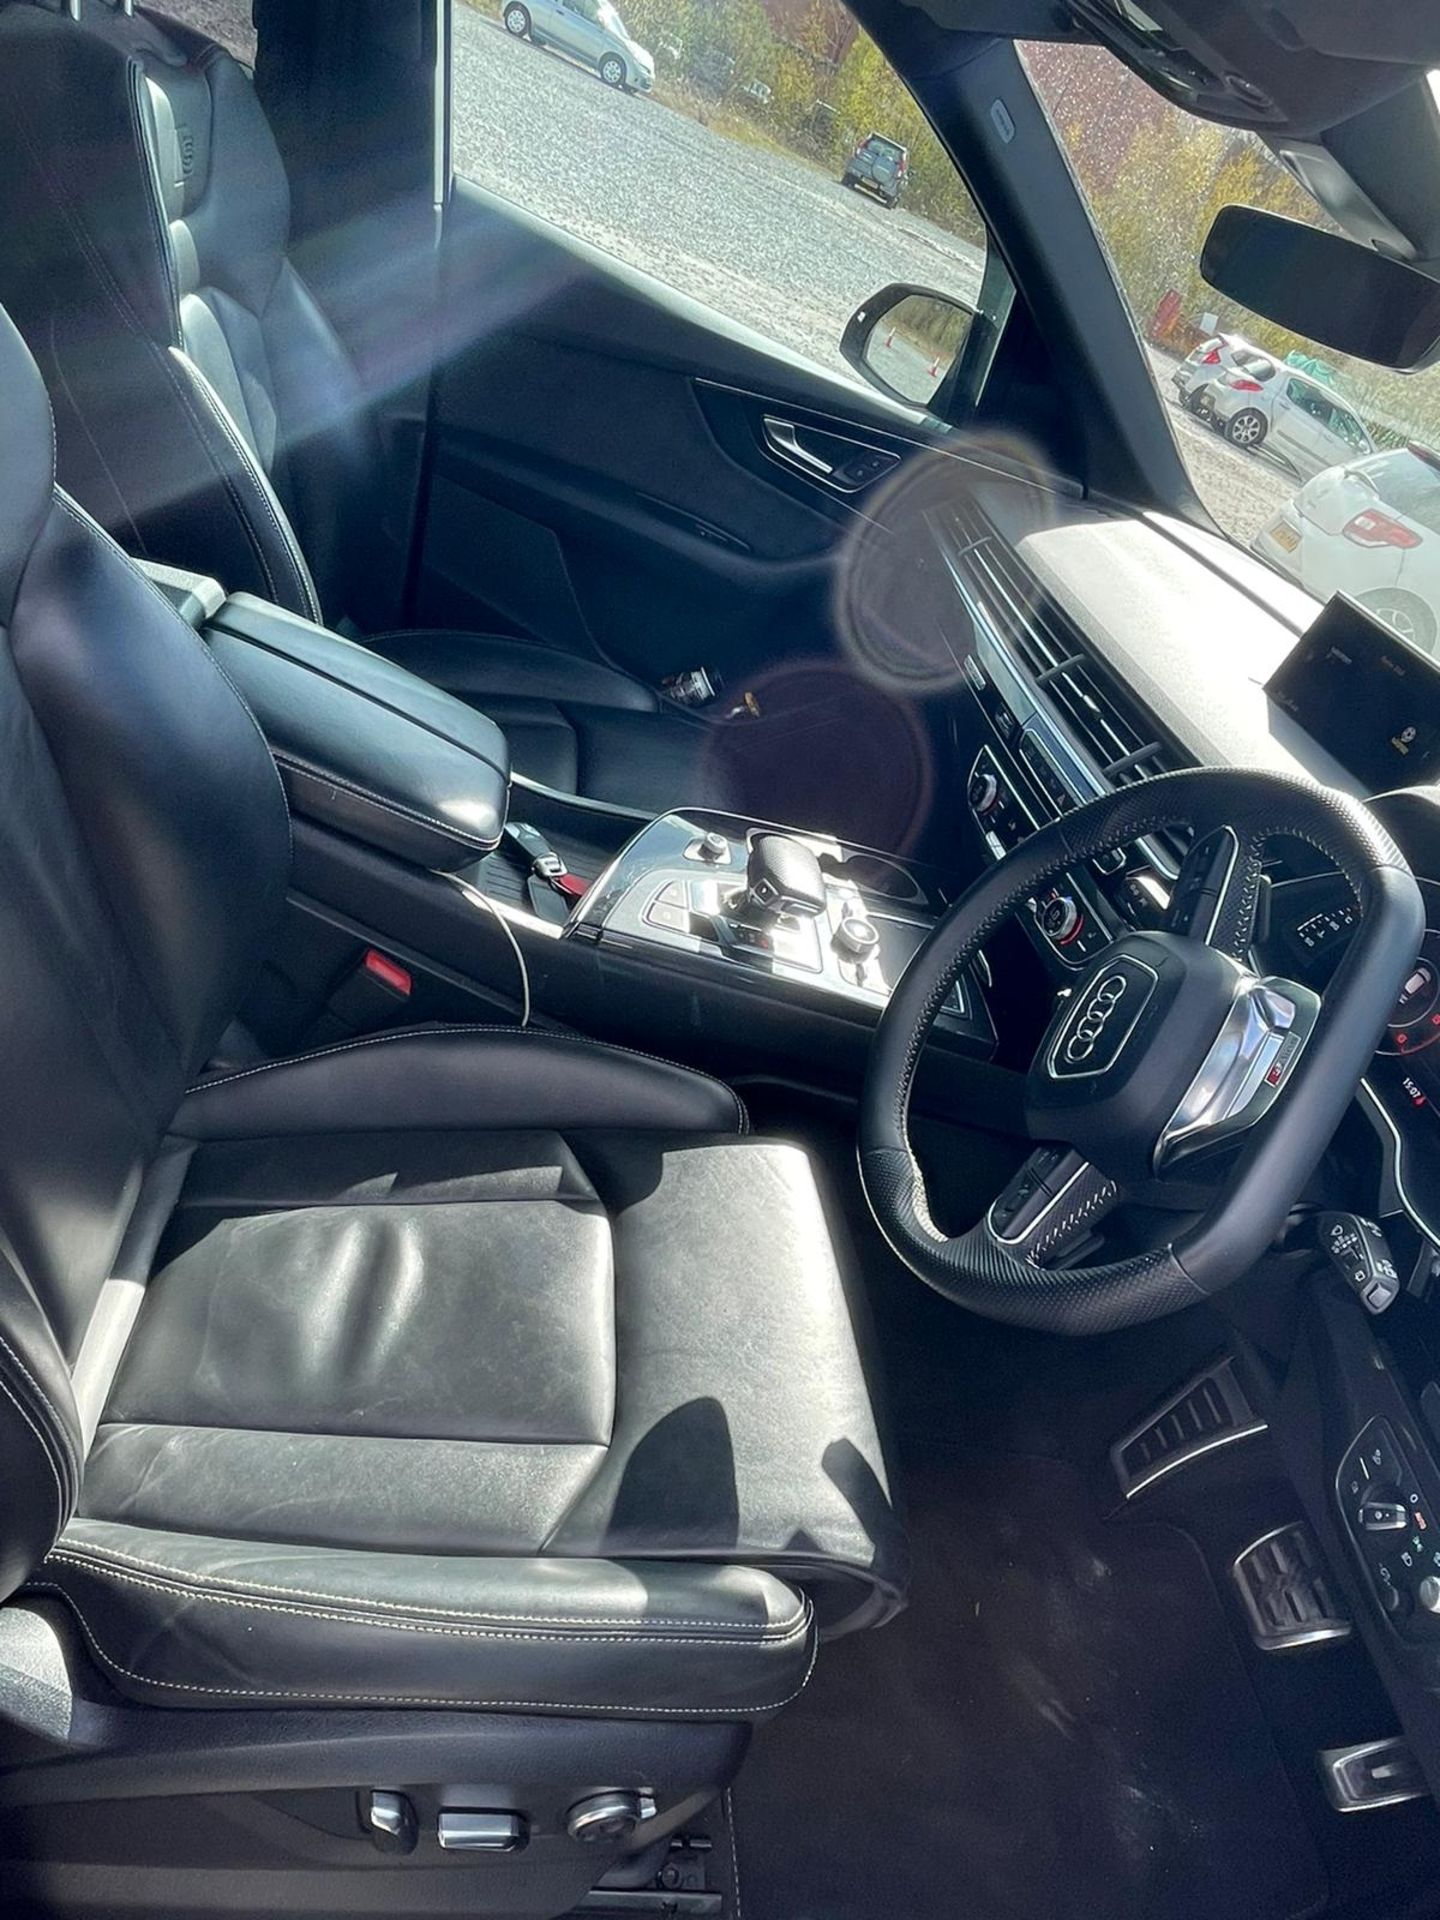 2019 Audi Q7 Black edition. LOW BUYERS PREMIUM of 8% - Image 11 of 18